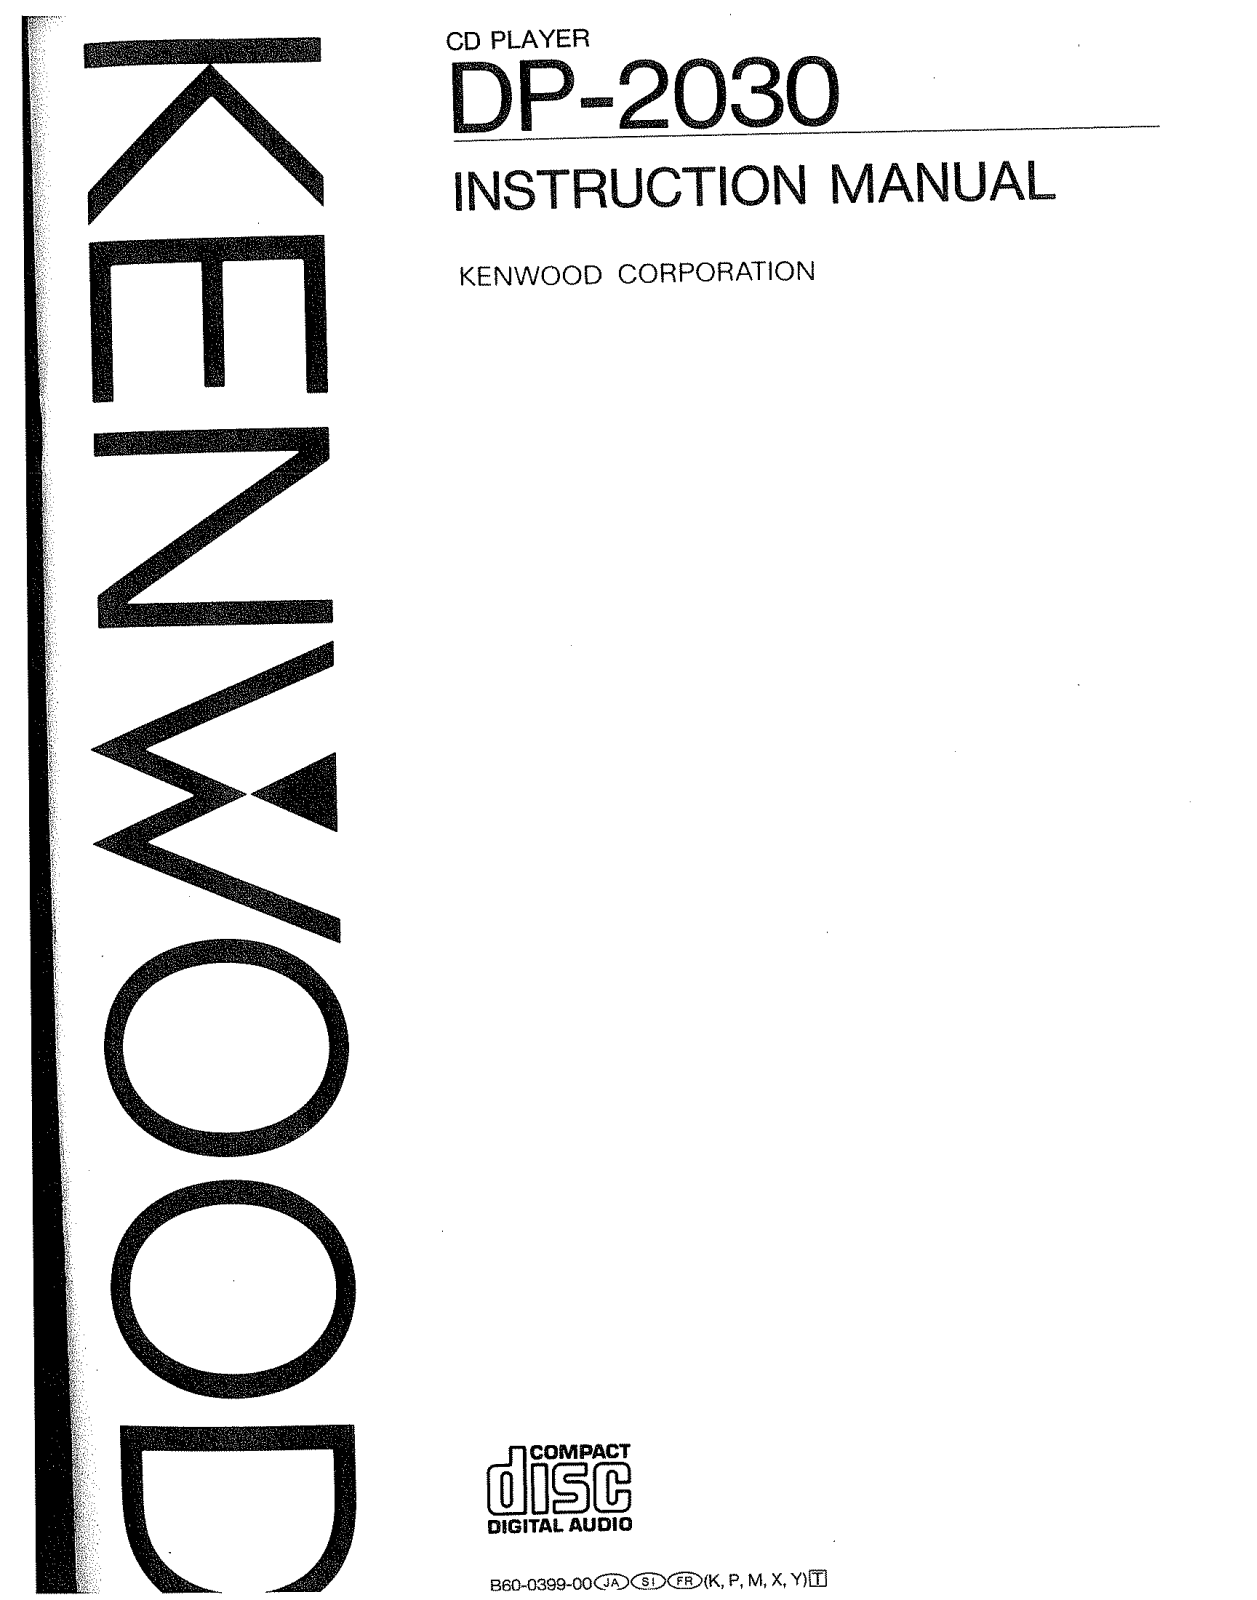 Kenwood DP-2030 Owner's Manual